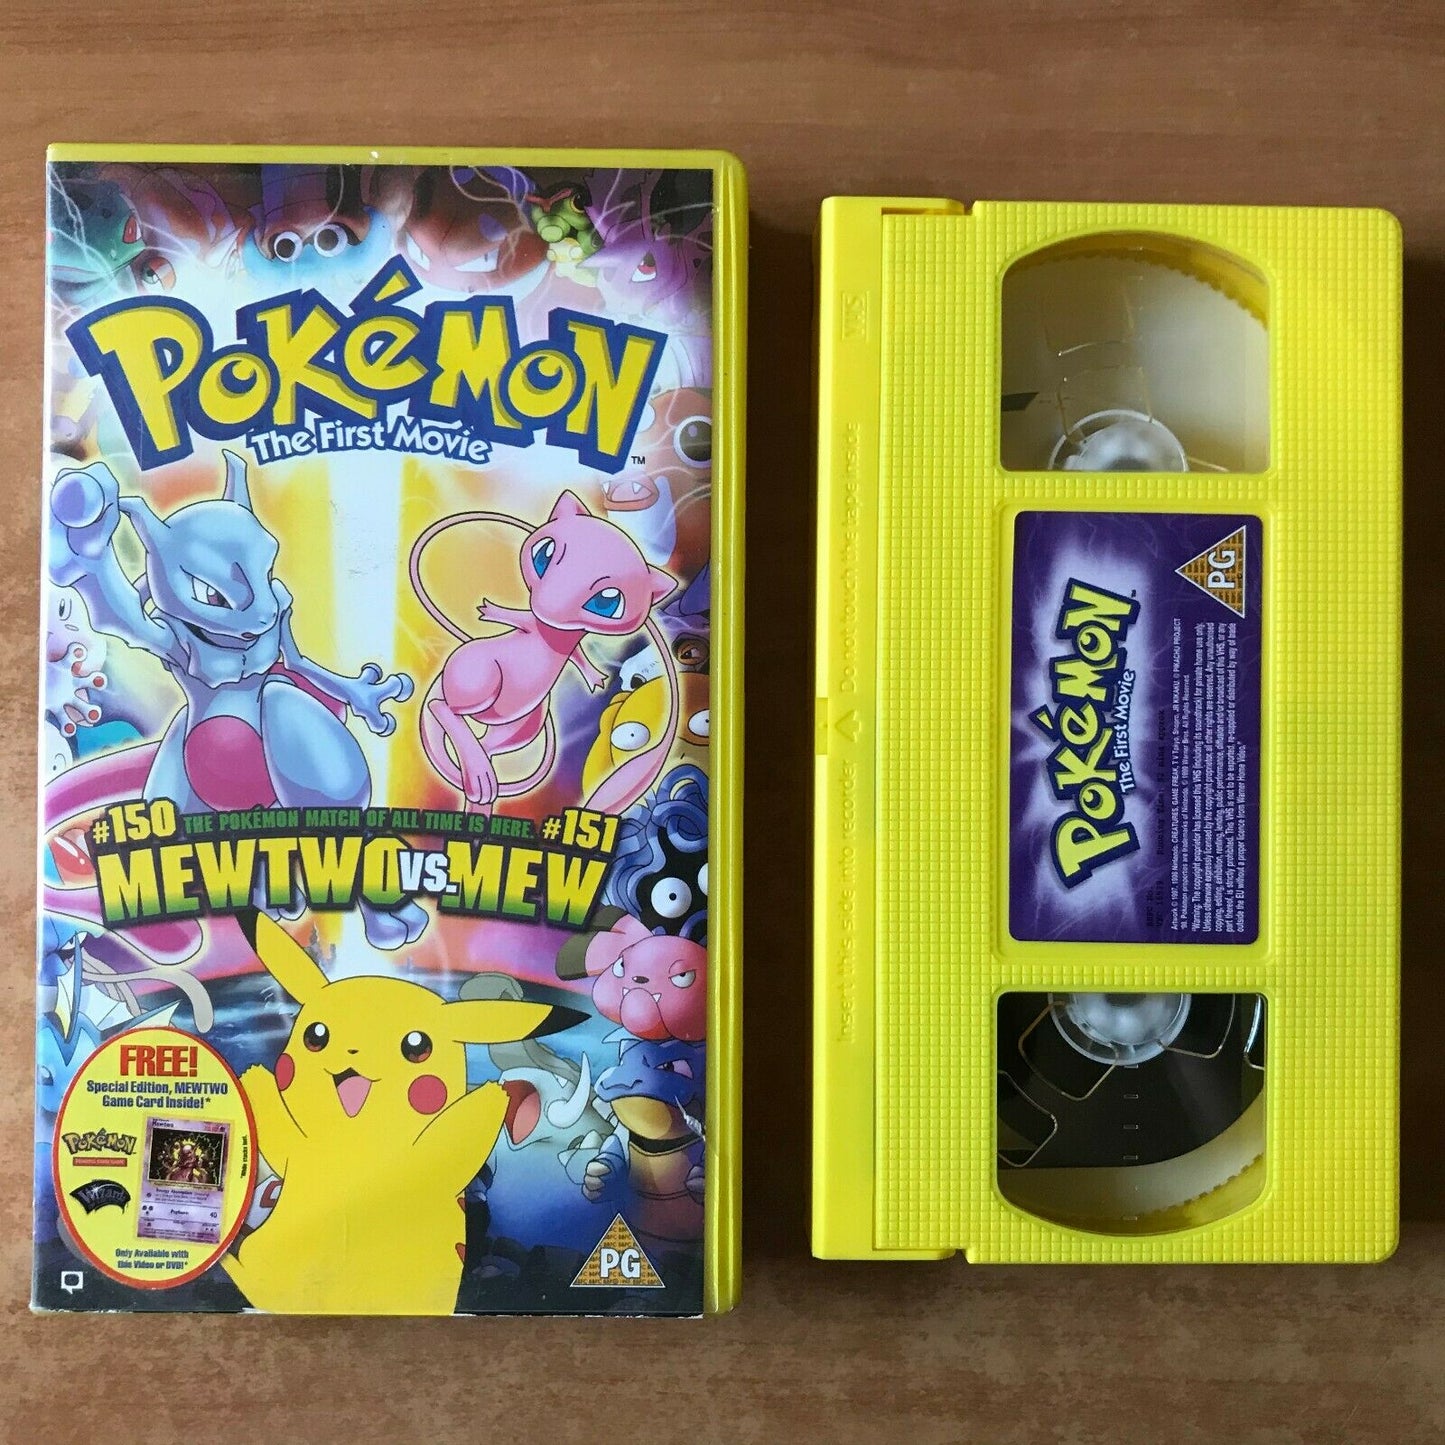 Pokemon The First Movie [Mewtwo Vs. Mew] Manga - Anime - Children's - Pal VHS-